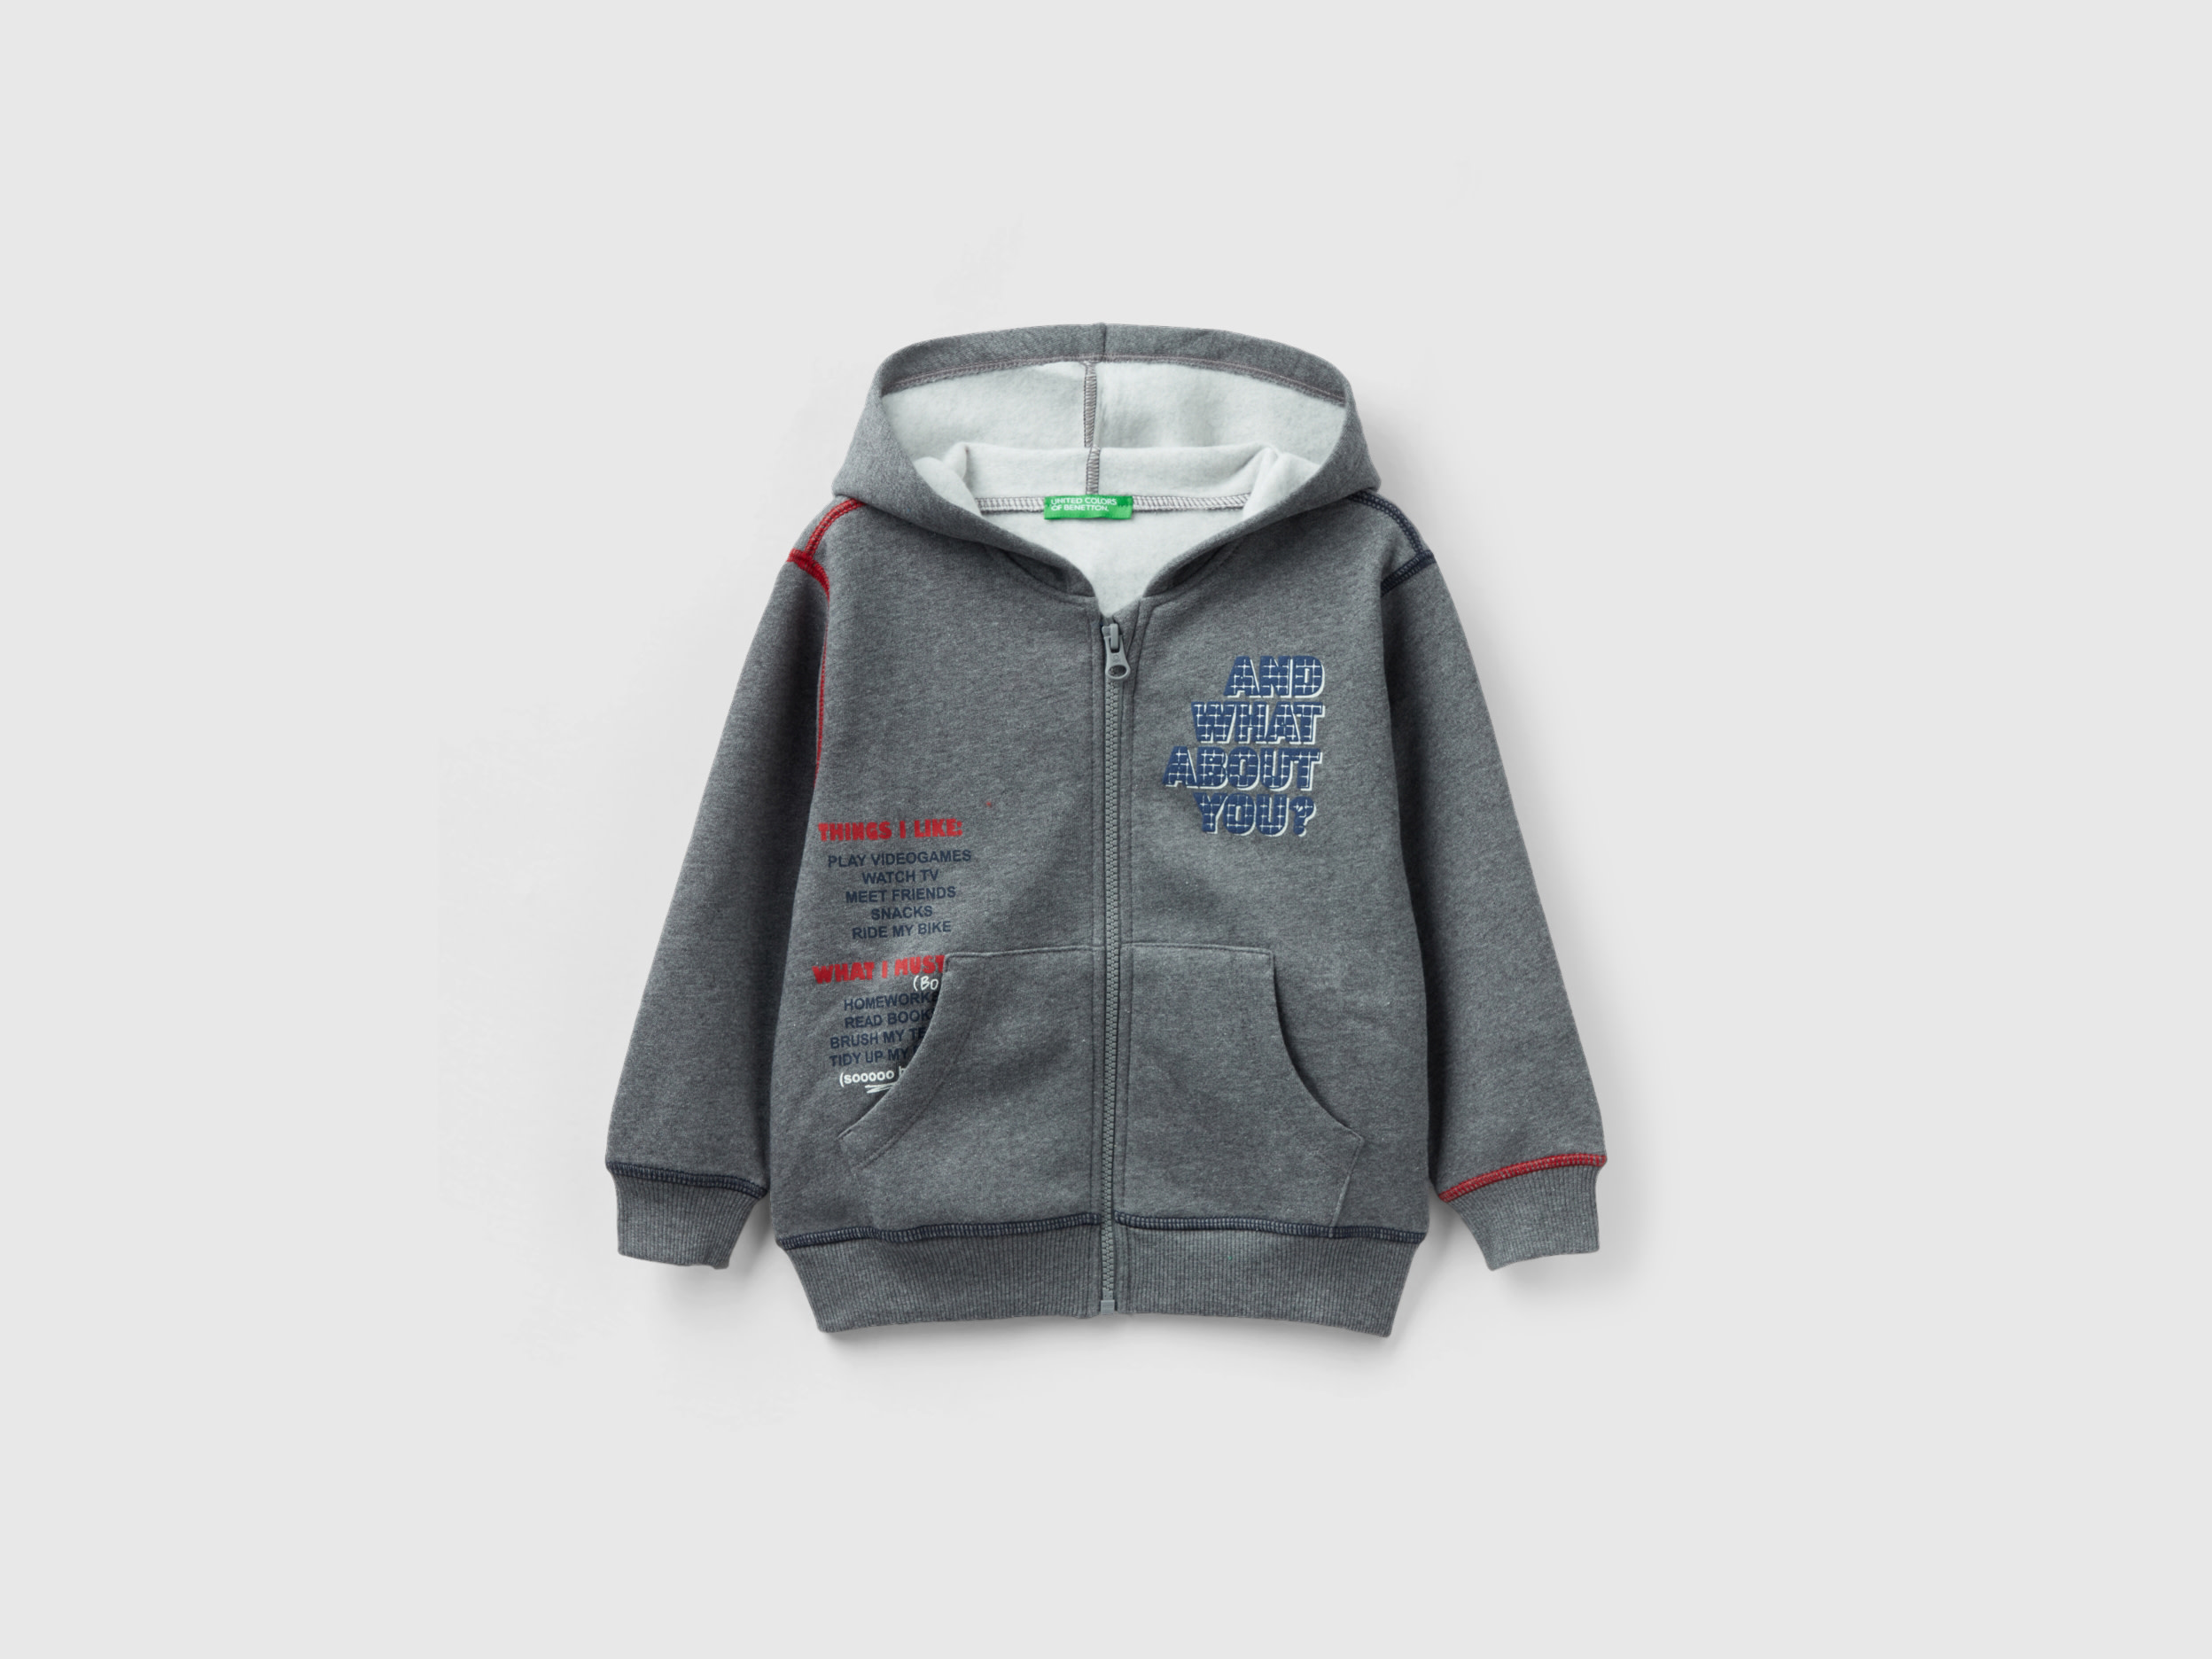 Benetton, Oversized Sweatshirt With Hood And Print, size 18-24, Dark Gray, Kids